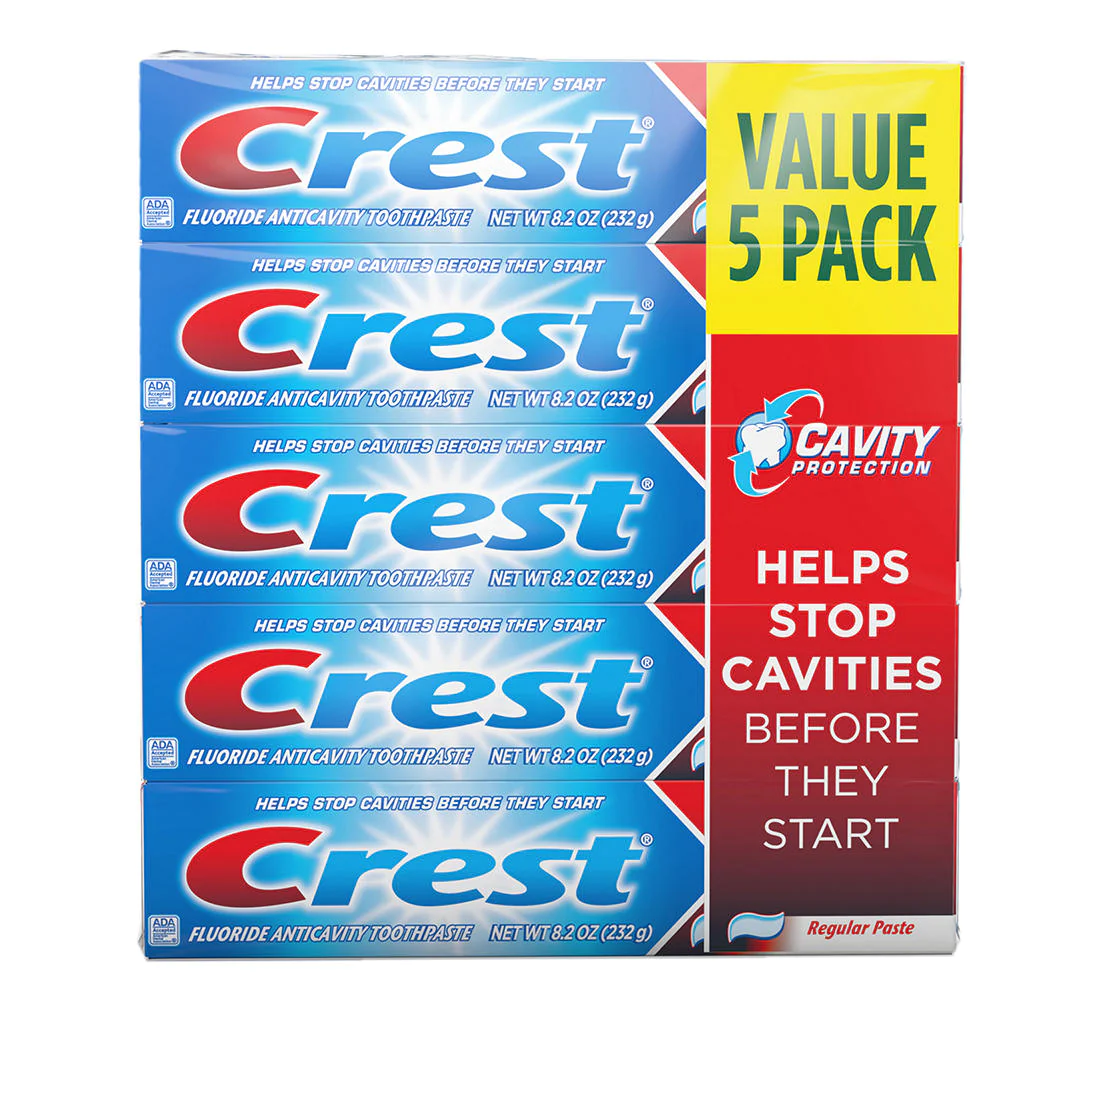 crest toothpaste image